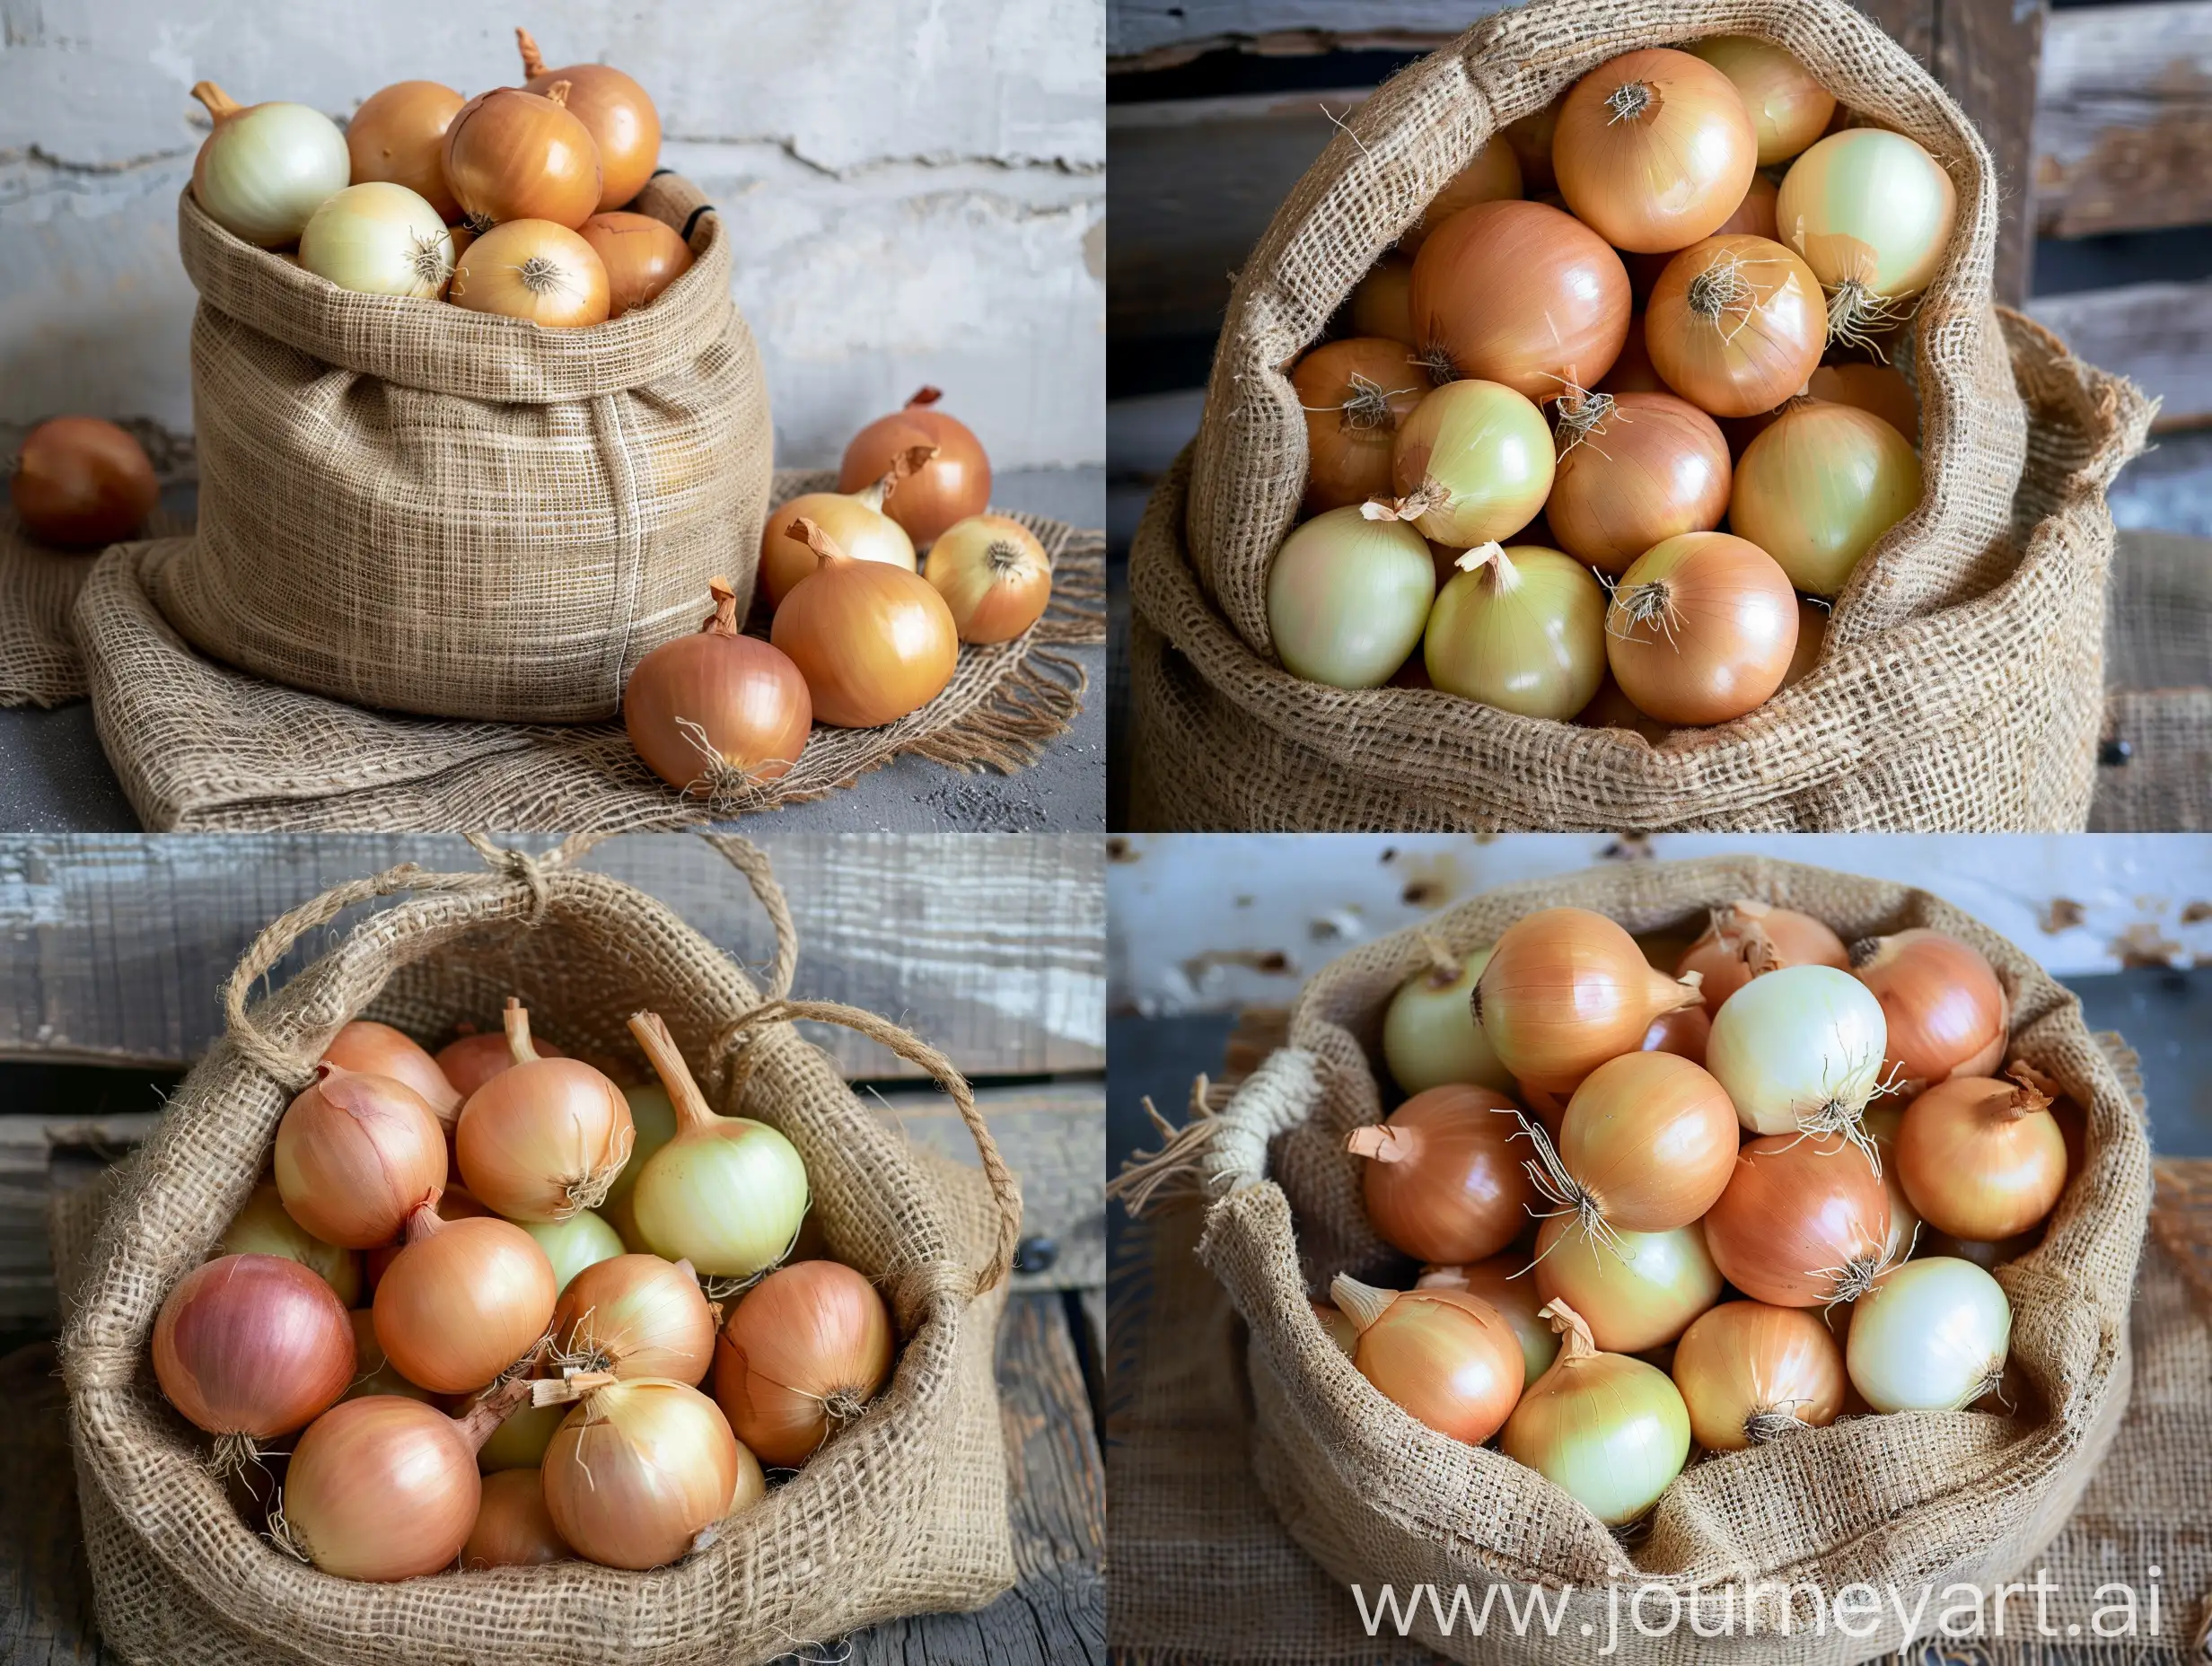 Fresh-Organic-Onions-in-a-Rustic-Burlap-Bag-MarketFresh-Produce-Advertisement